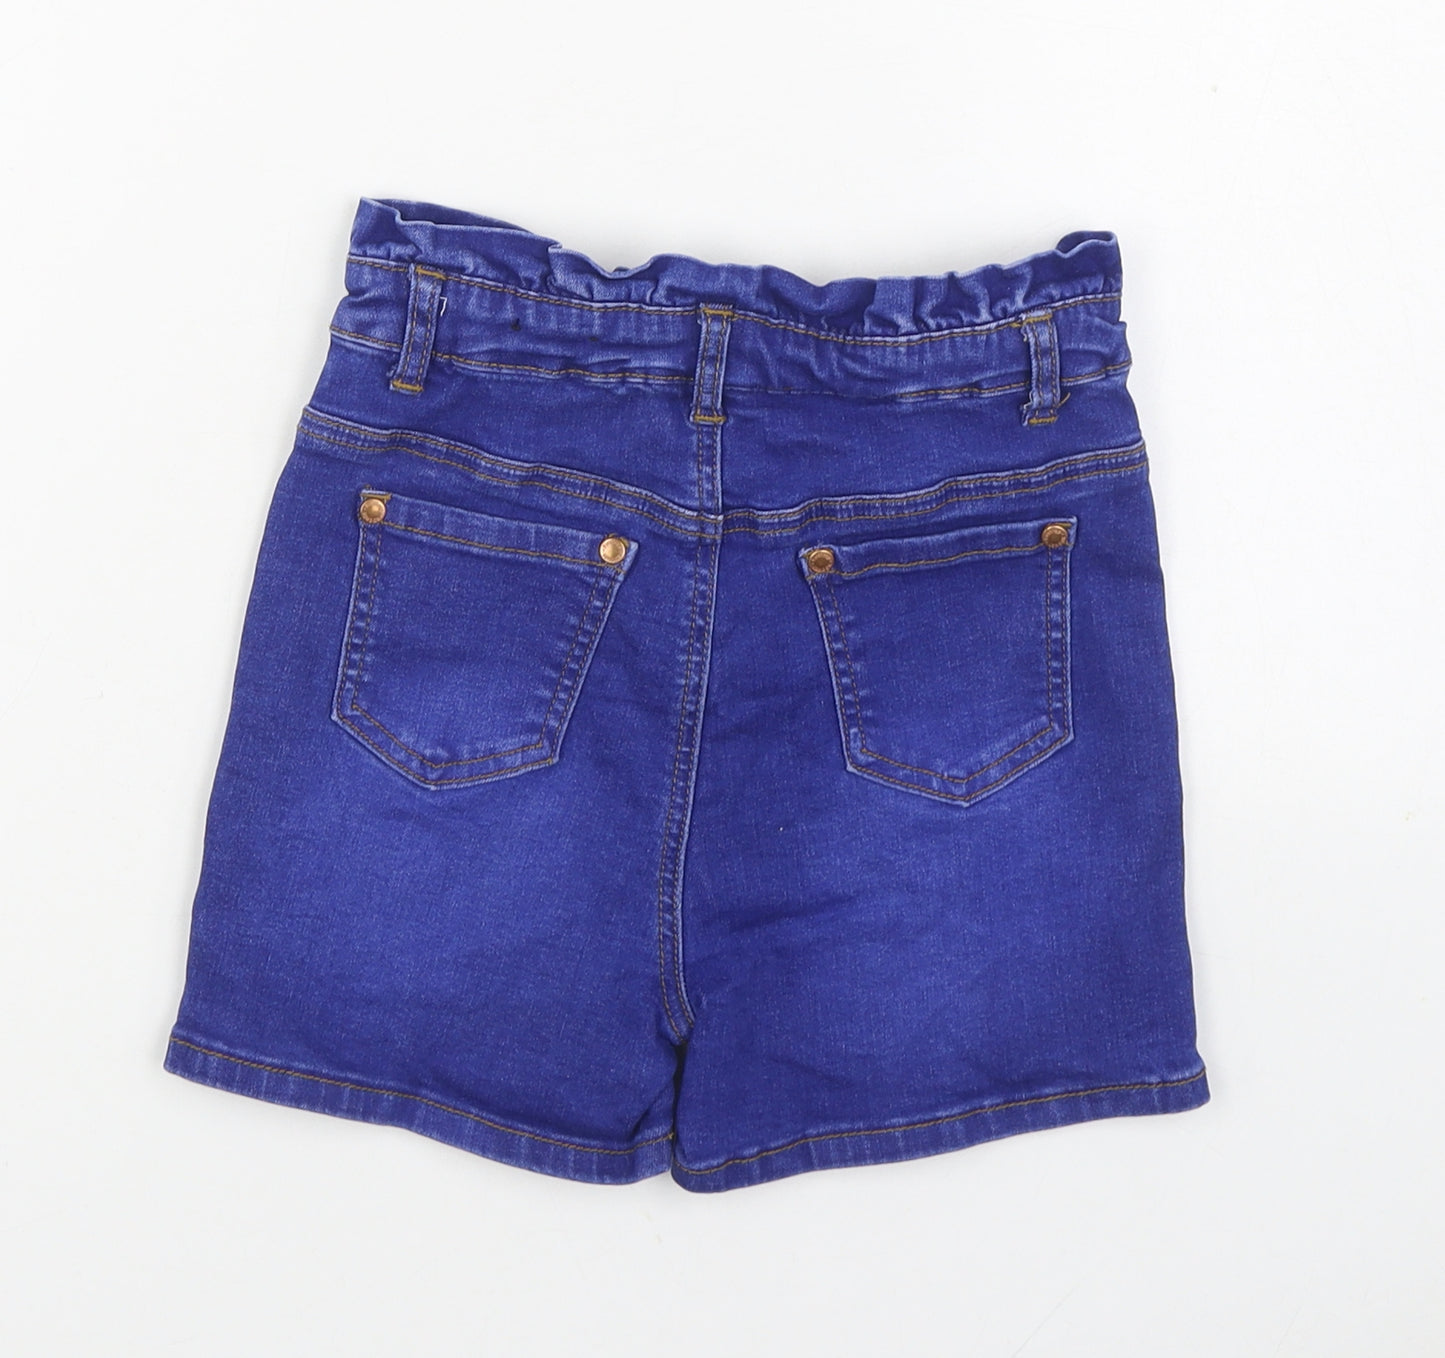 Firetrap Girls Blue Cotton Boyfriend Shorts Size 9-10 Years Regular Zip